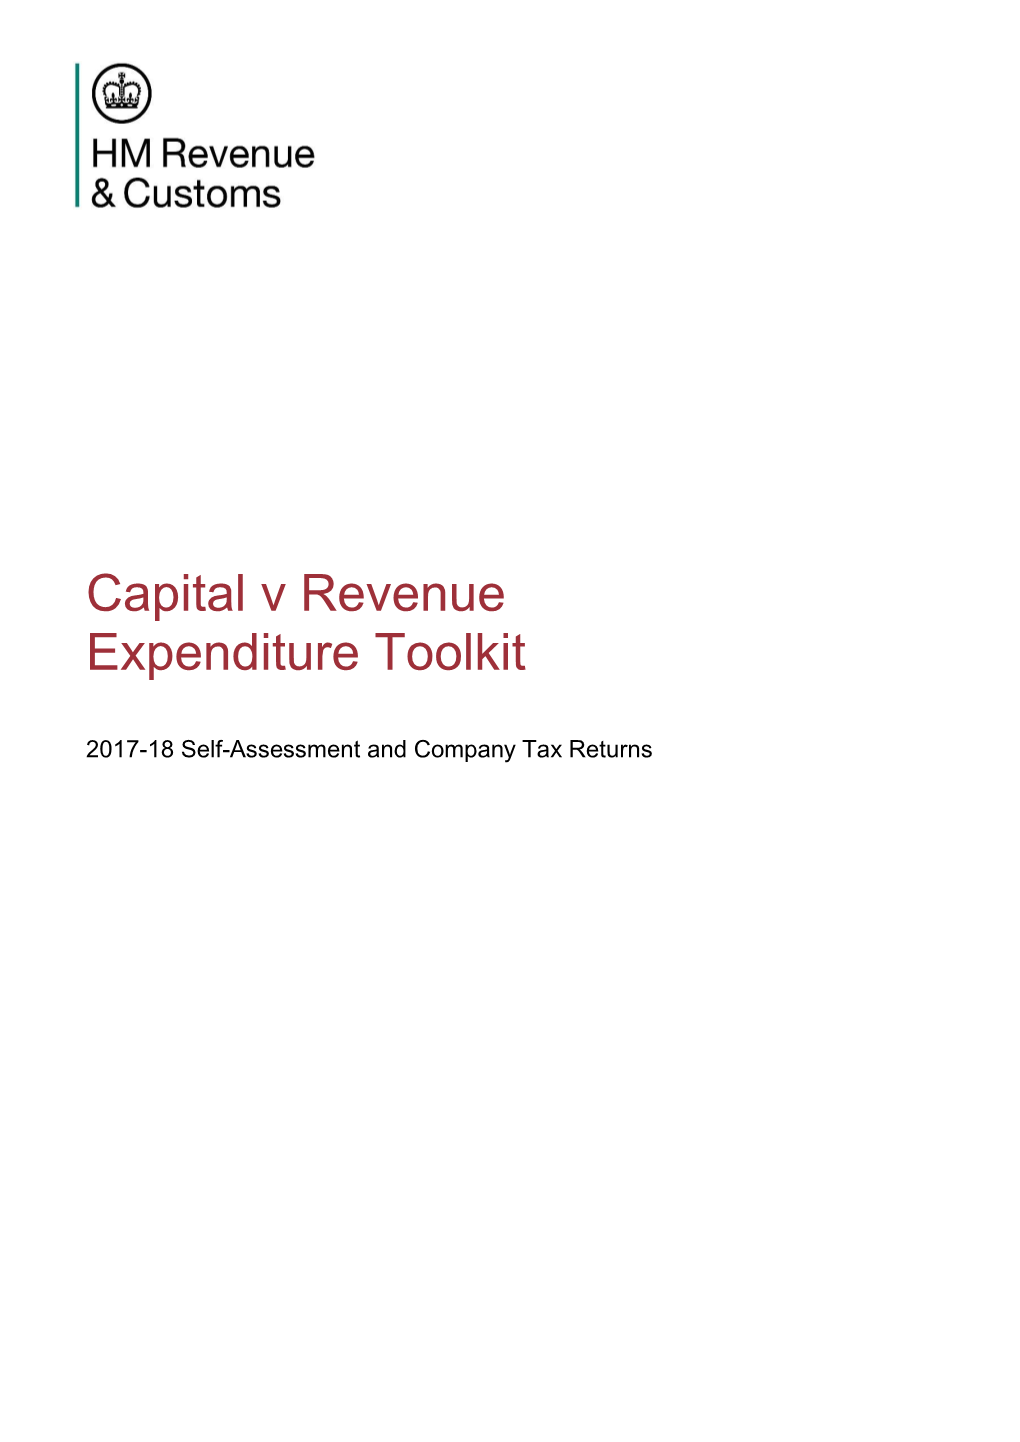 Capital V Revenue Expenditure Toolkit